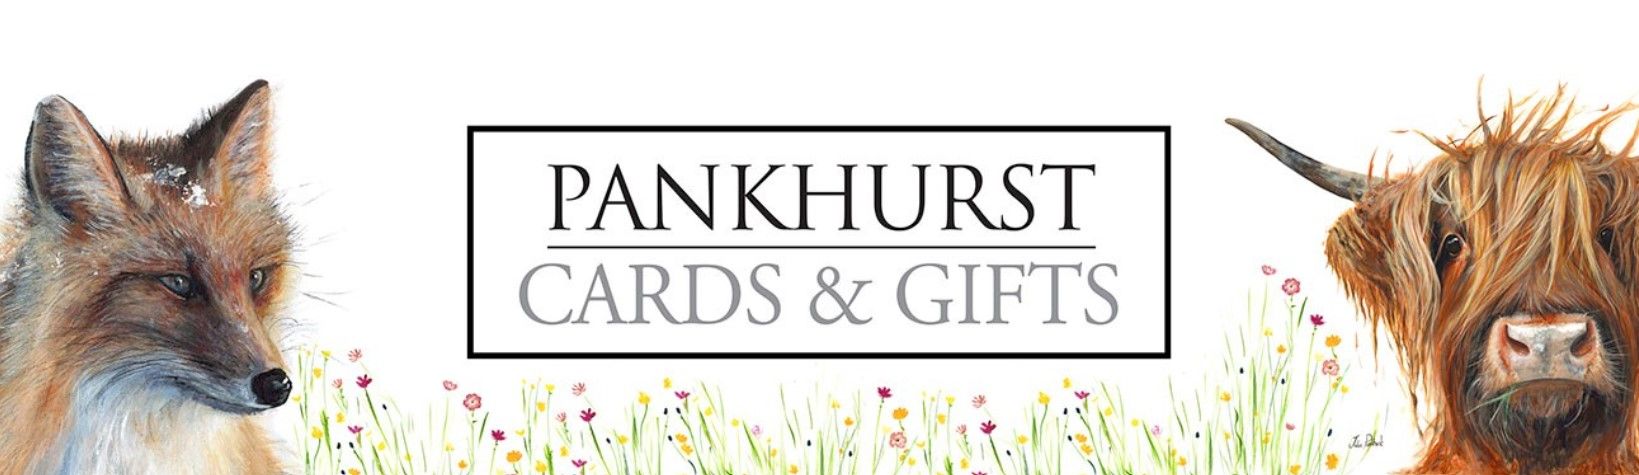 Pankhurst Cards & Gifts